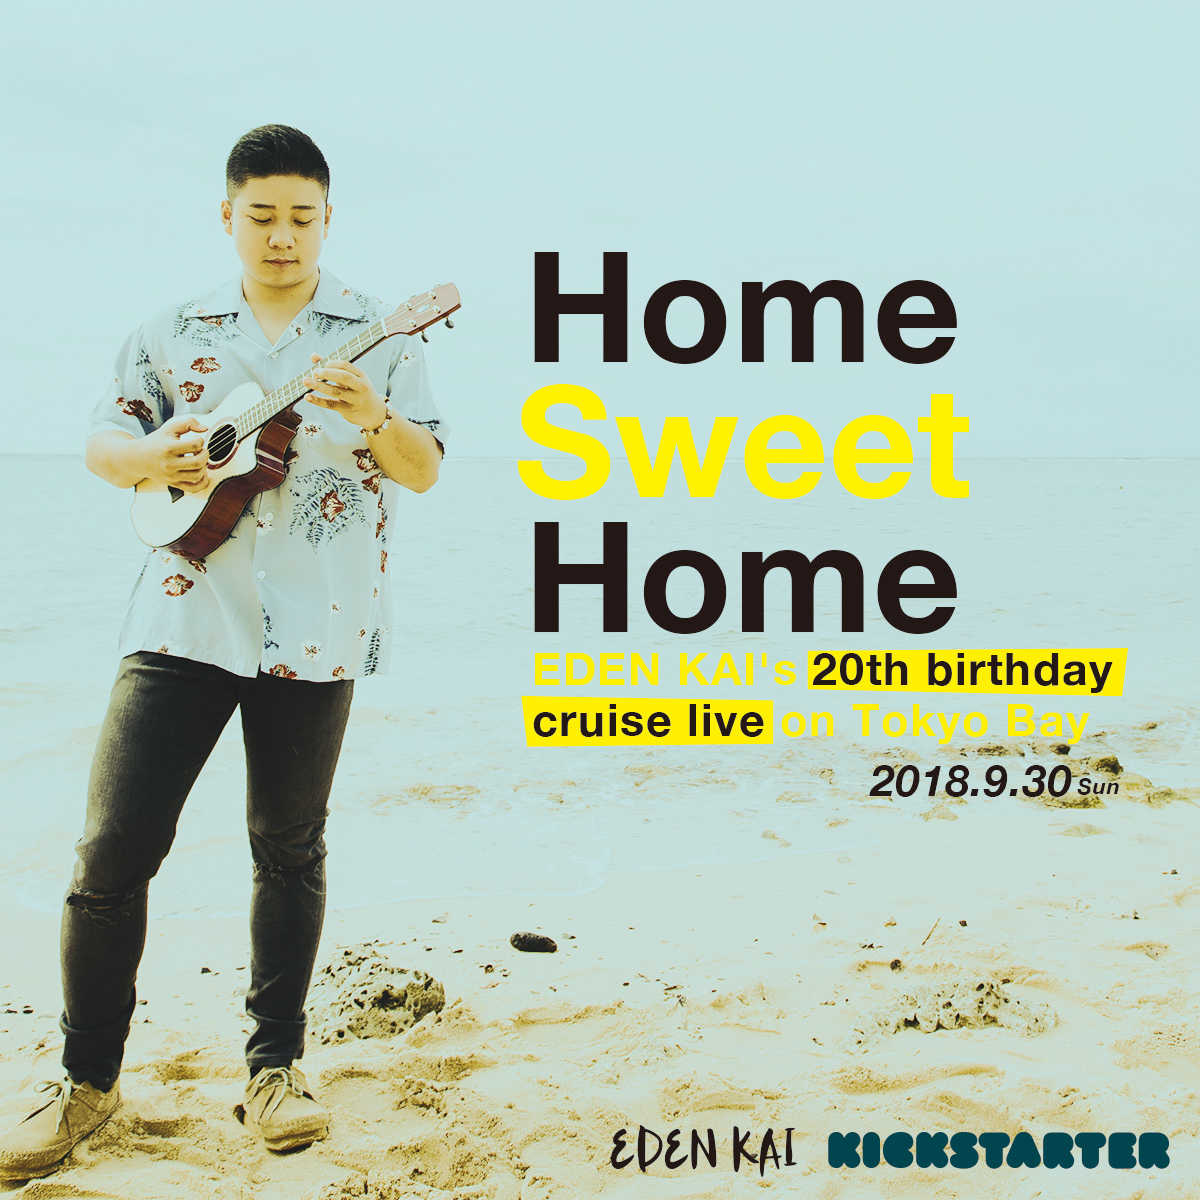 『Home Sweet Home ? EDEN KAI’s 20th birthday cruise live on Tokyo Bay』イベント告知画像